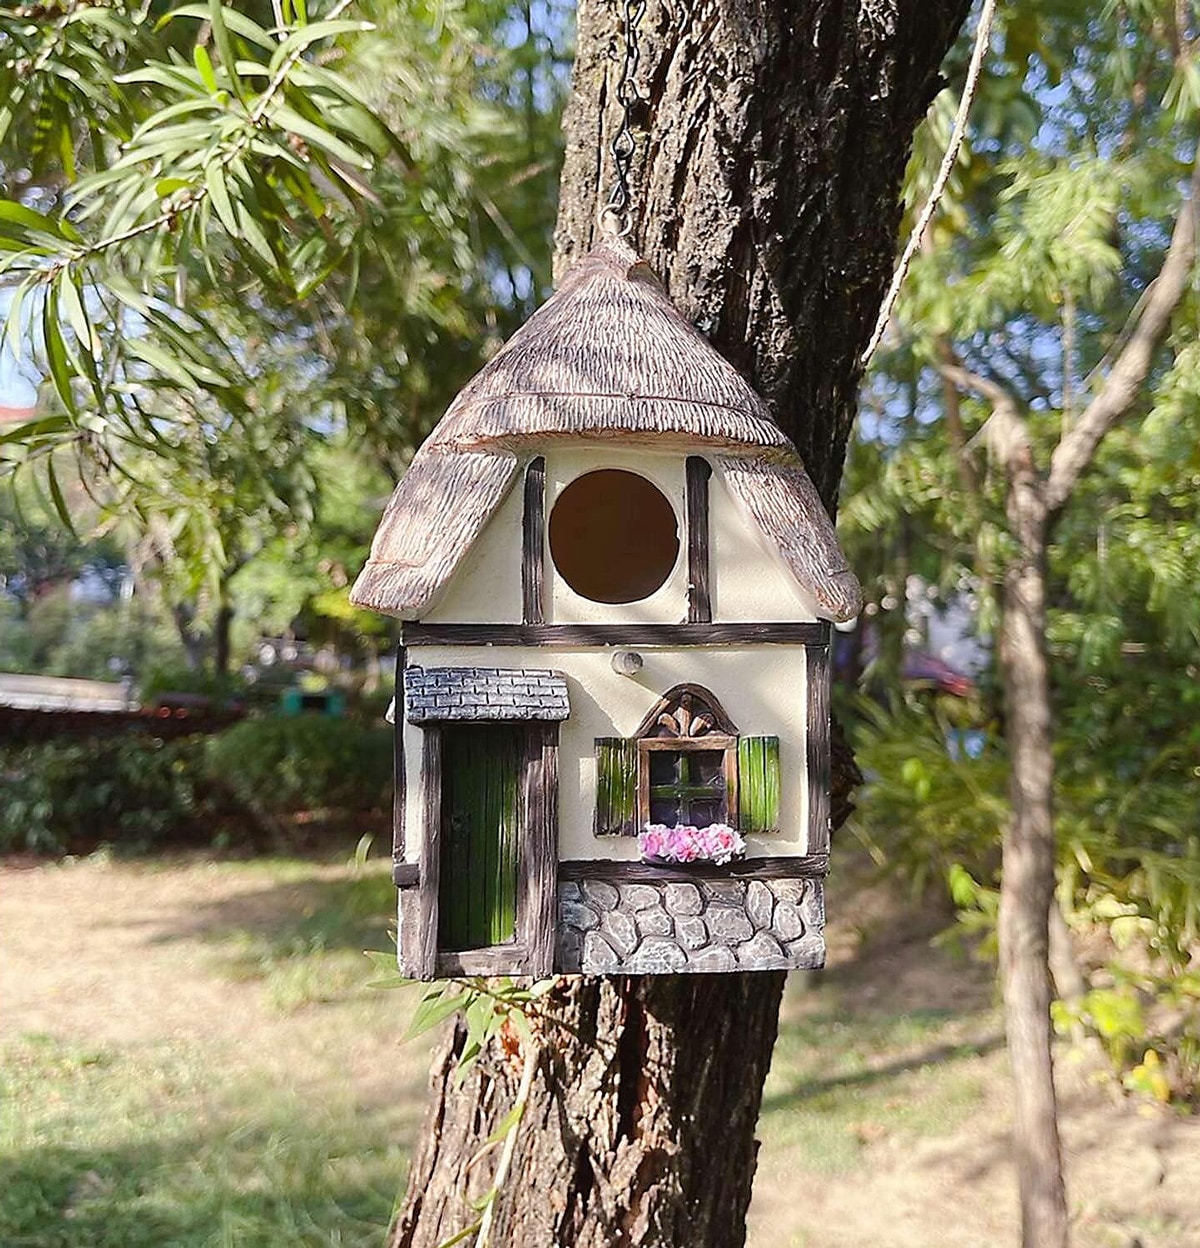 resin birdhouse is waterproof and sun-proof